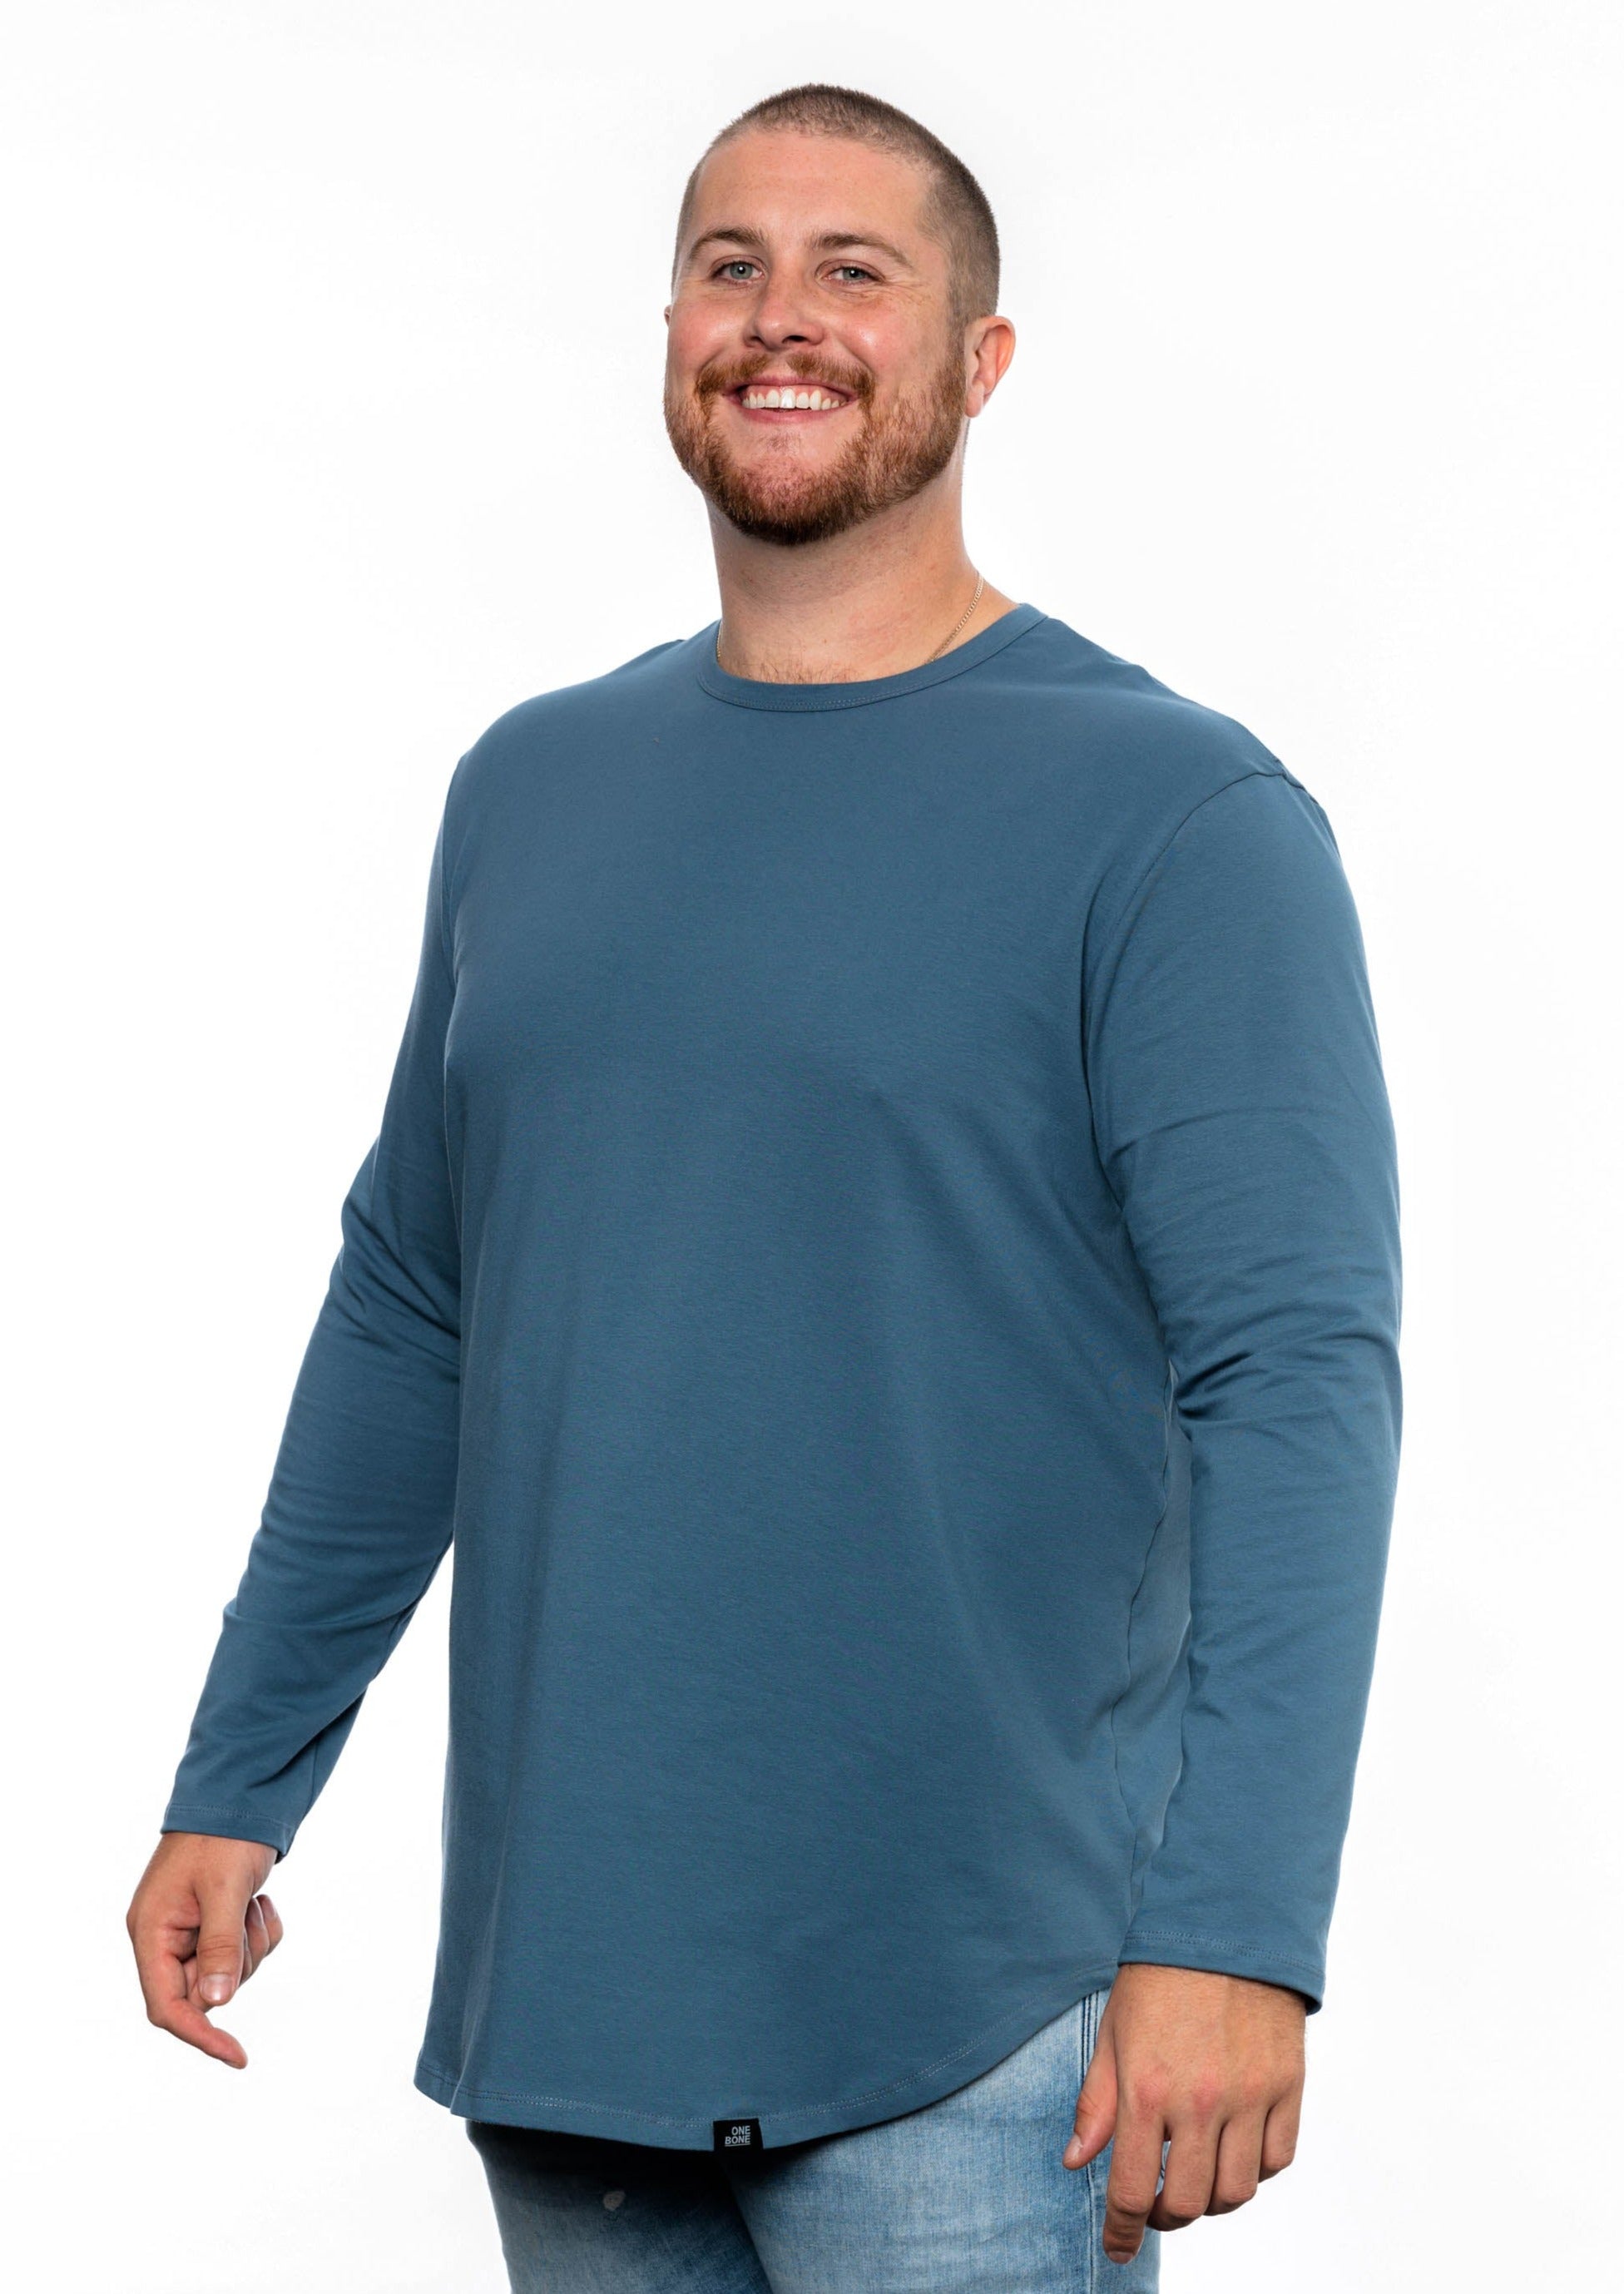 model-specs: Will is 6'7" | 300 lbs | size 1